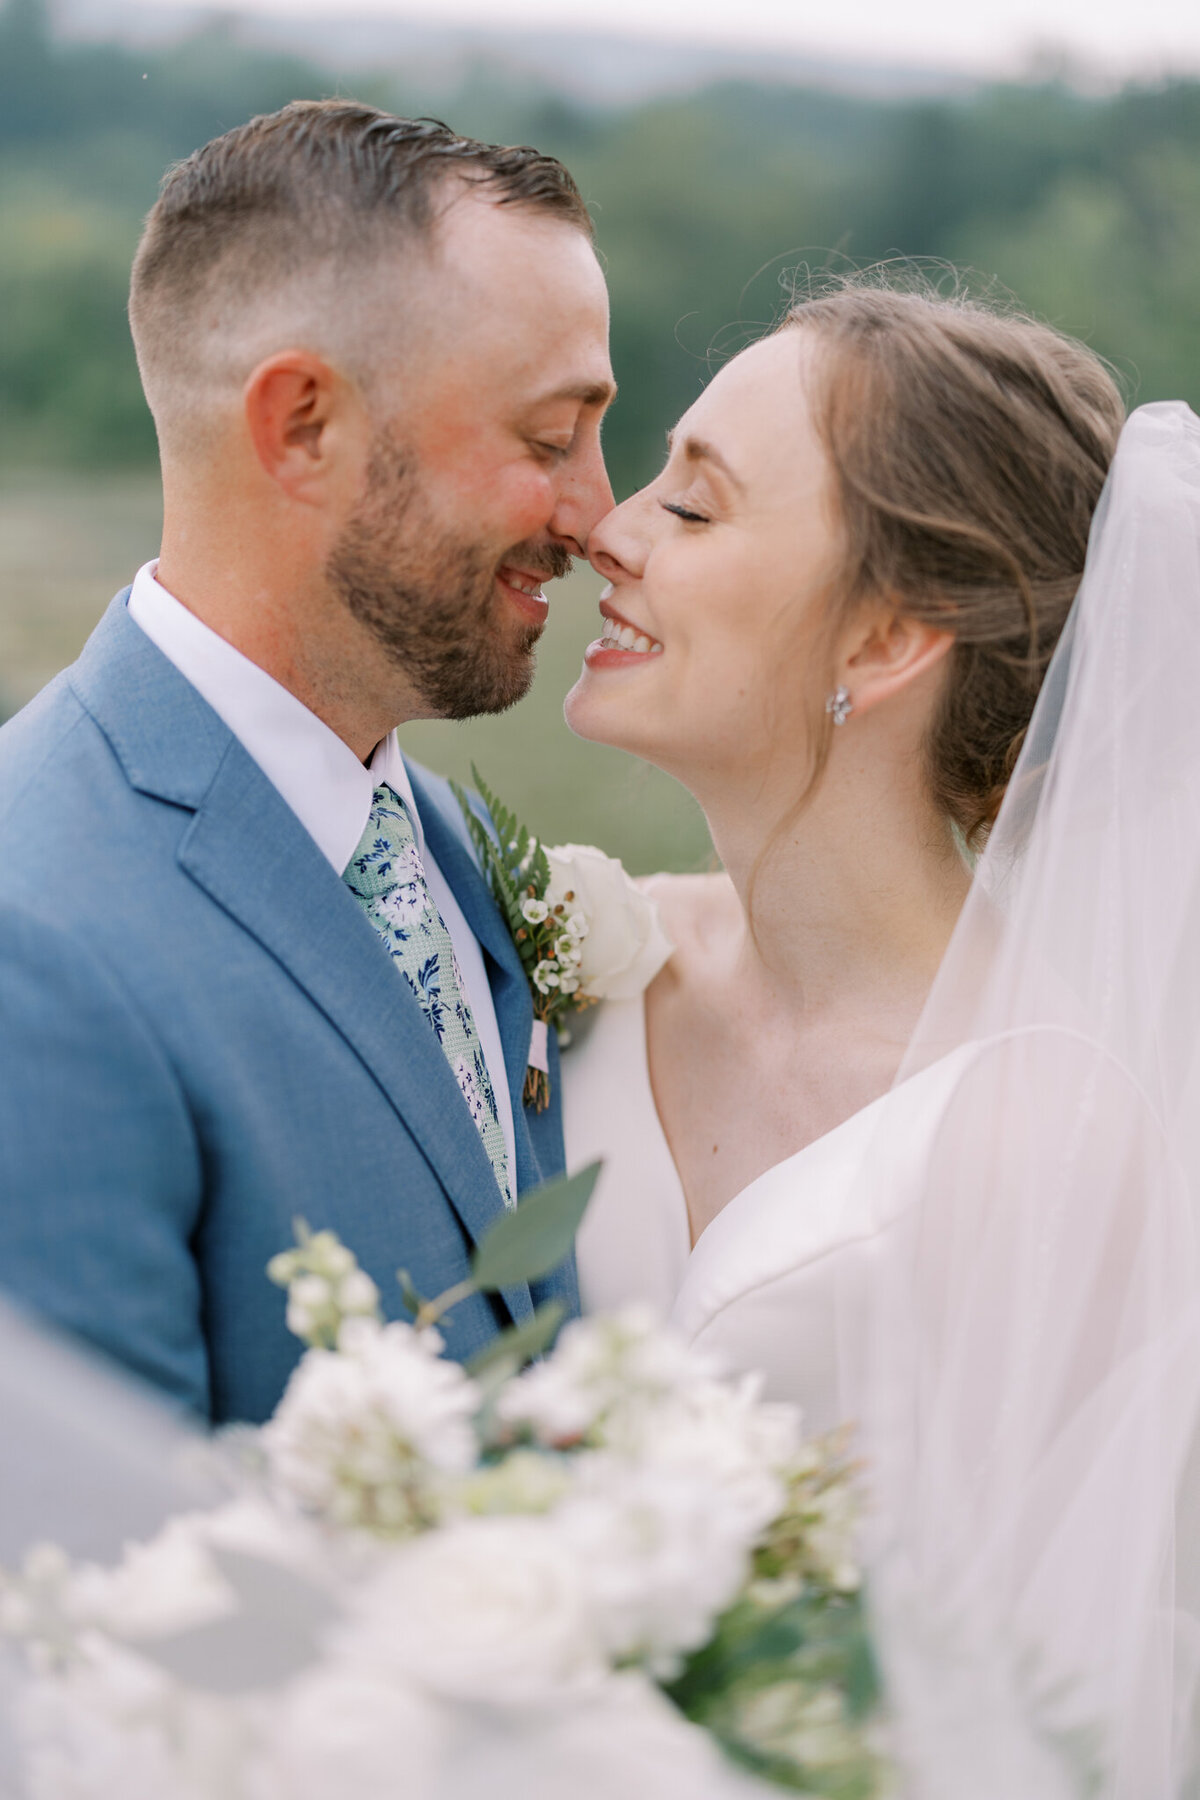 Central Pennsylvania Wedding Photographer | Ashlee Zimmerman